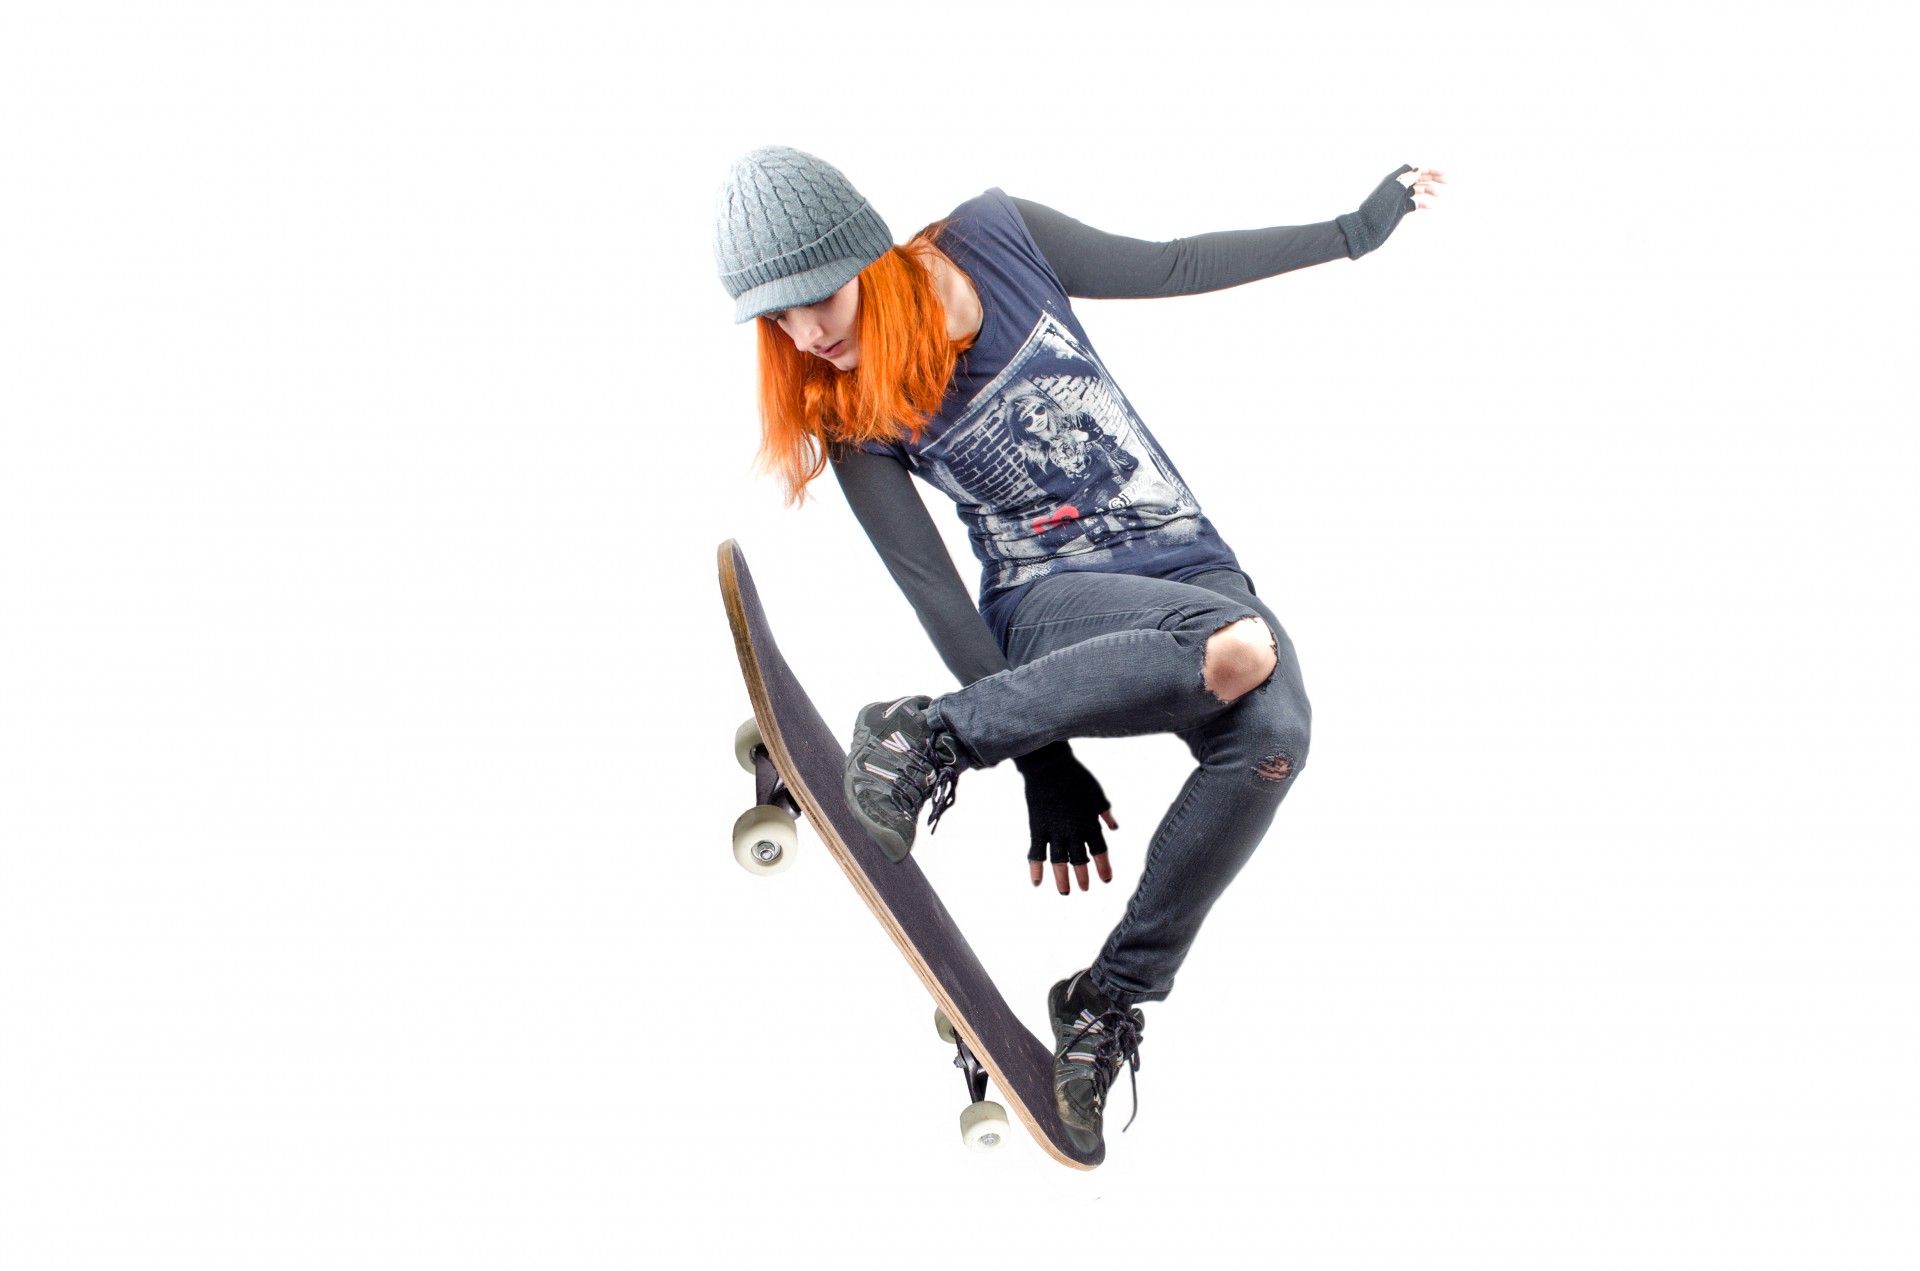 Skateboarder Woman Jumping